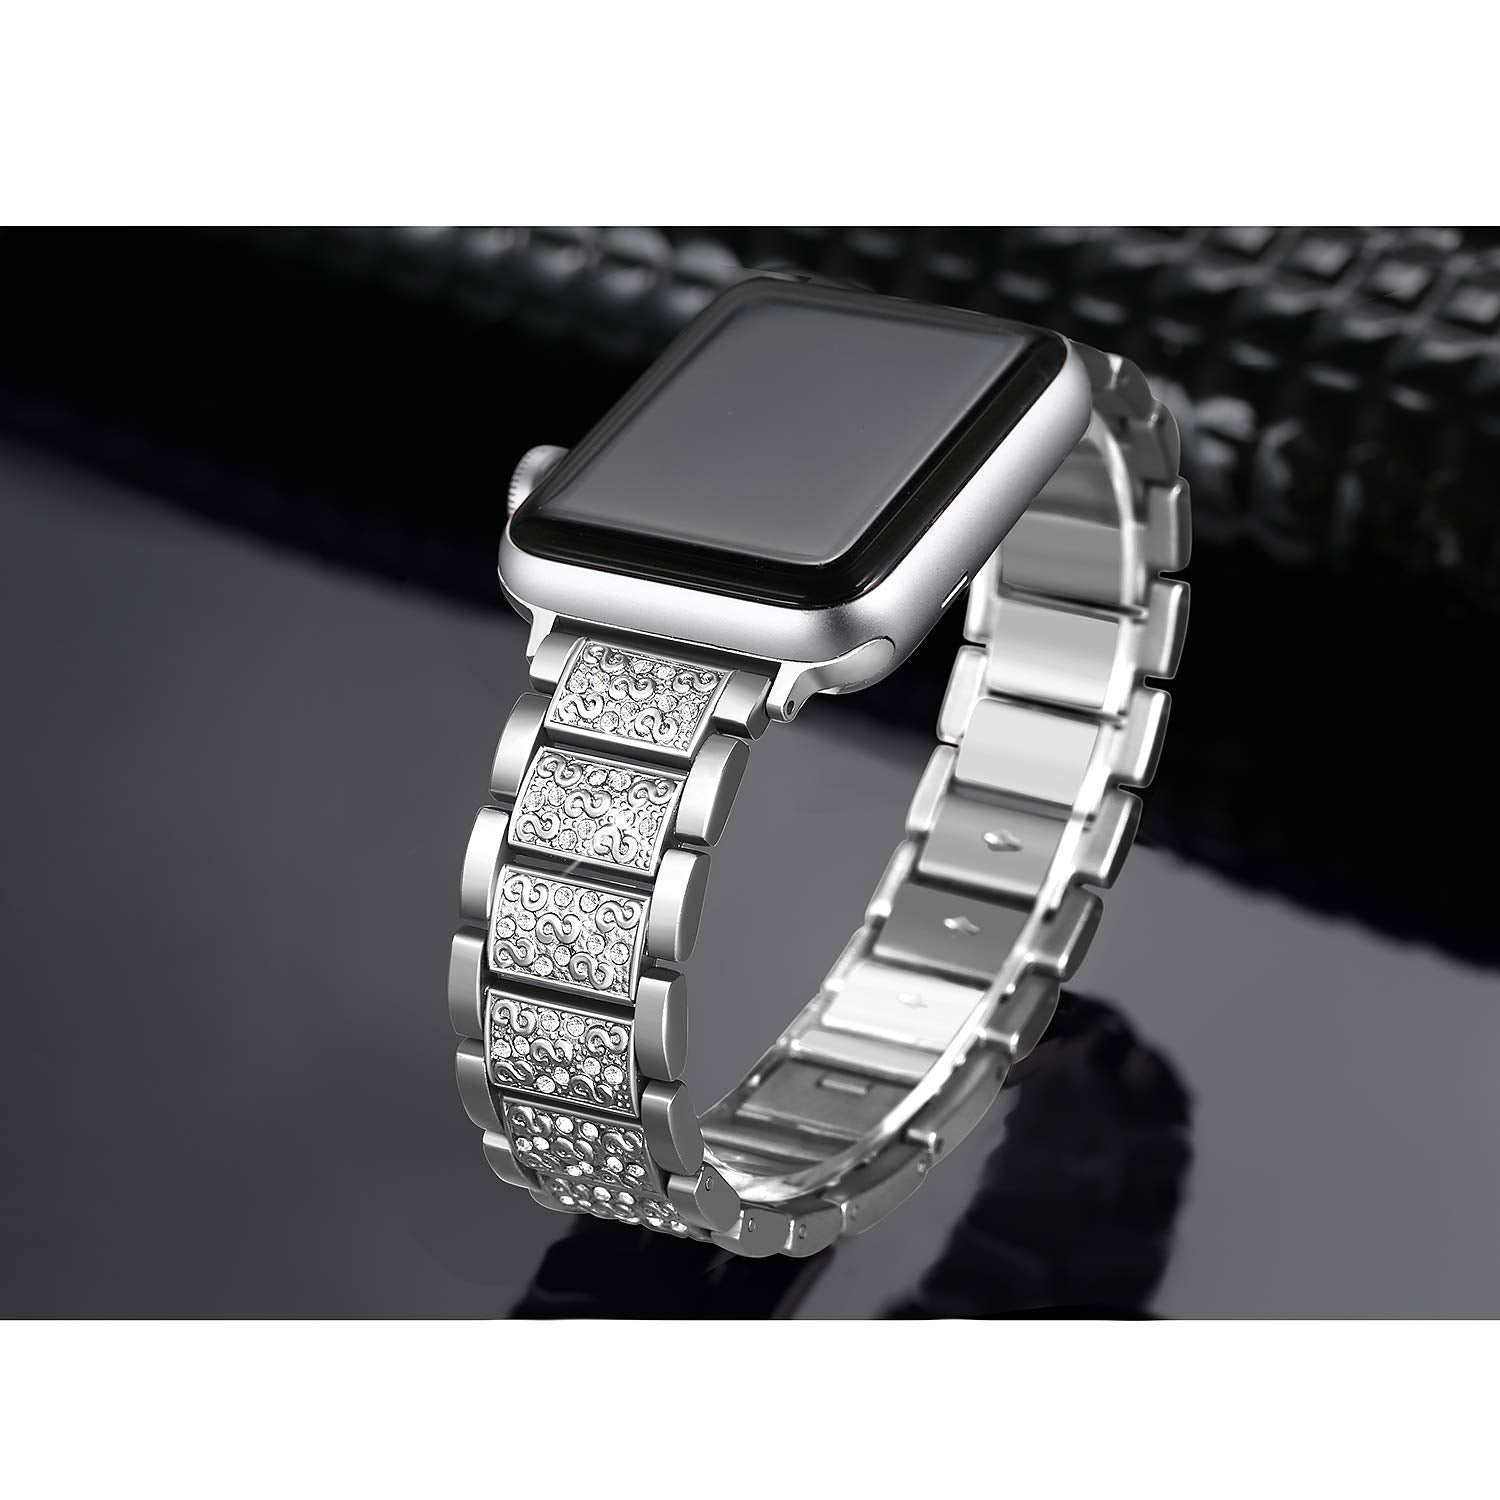 Apple Watch Stainless Diamond Watchband